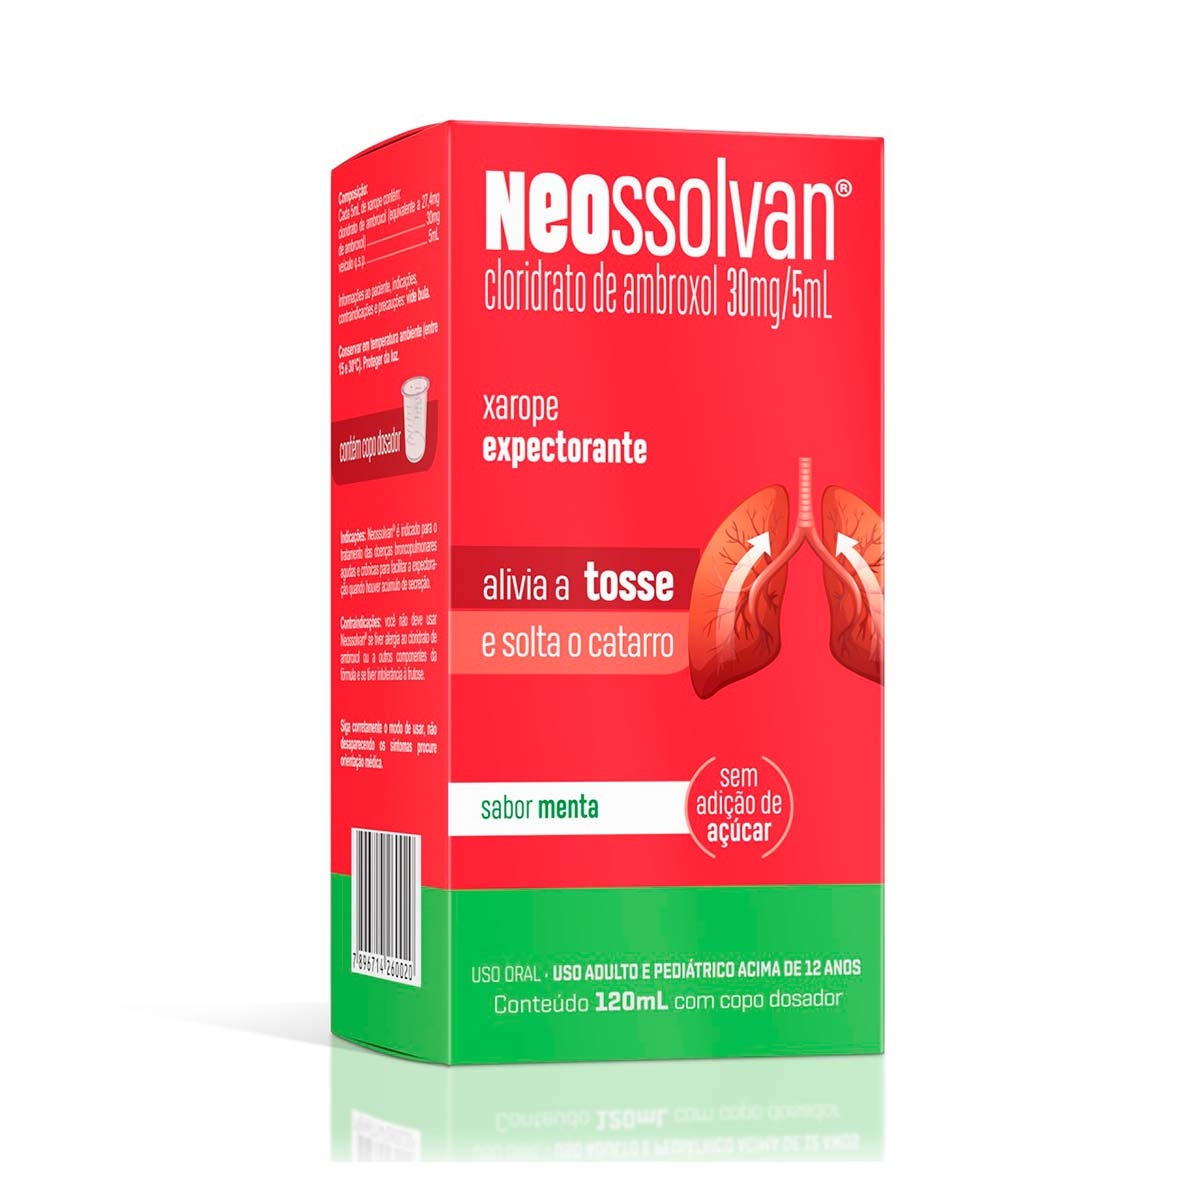 Neossolvan Cloridrato de Ambroxol 30mg/5ml xarope 120ml + copo dosador